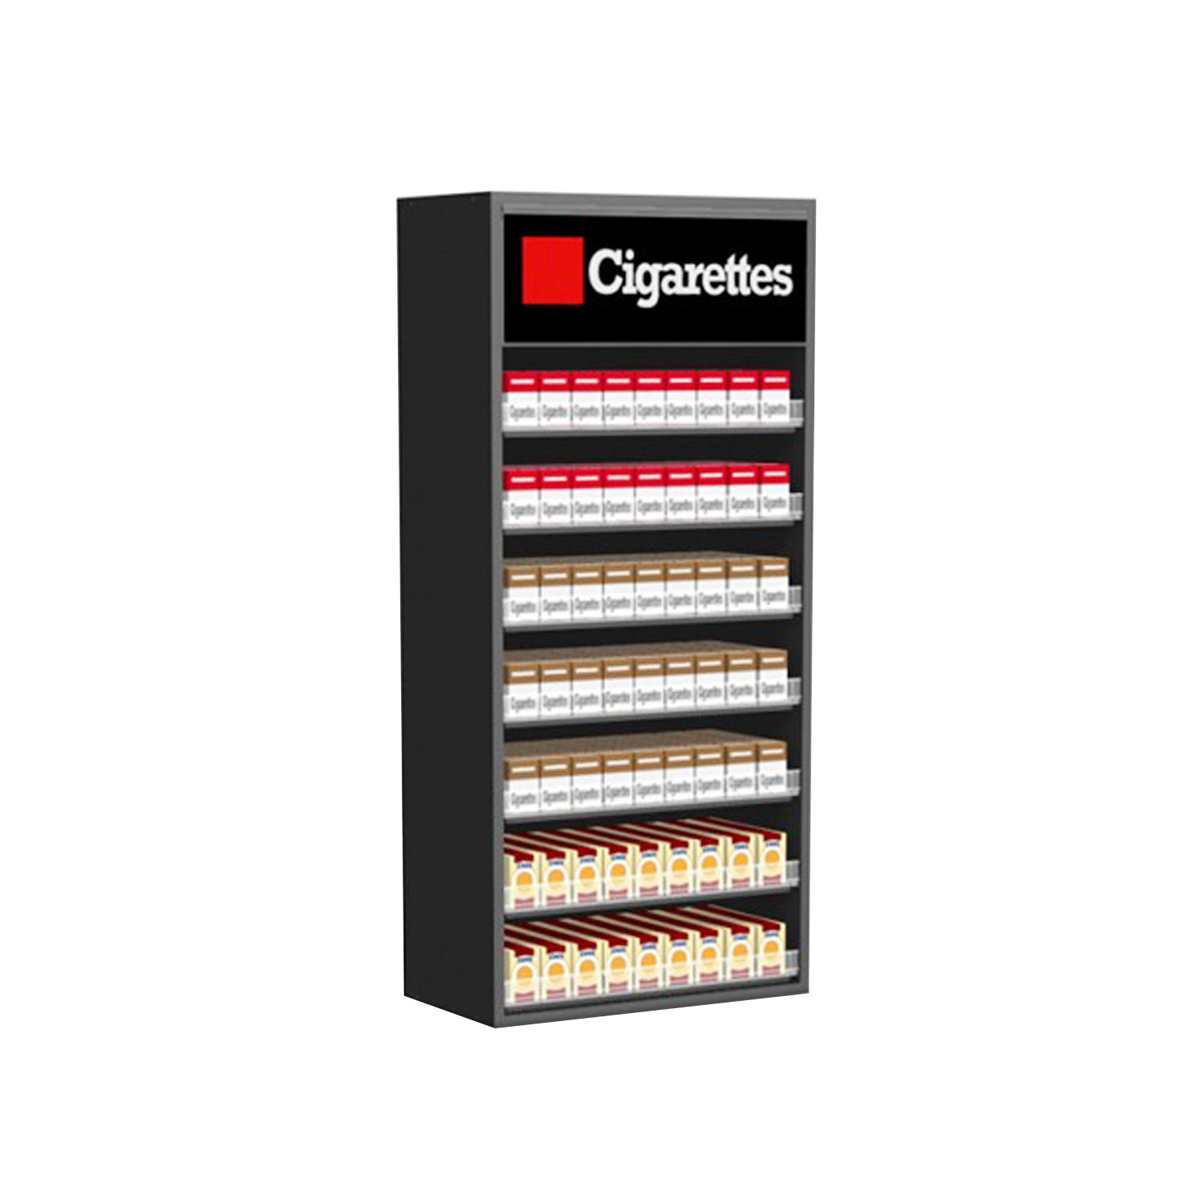 Loor Acrylic floor Cigarette Display shelf with pushers and logo